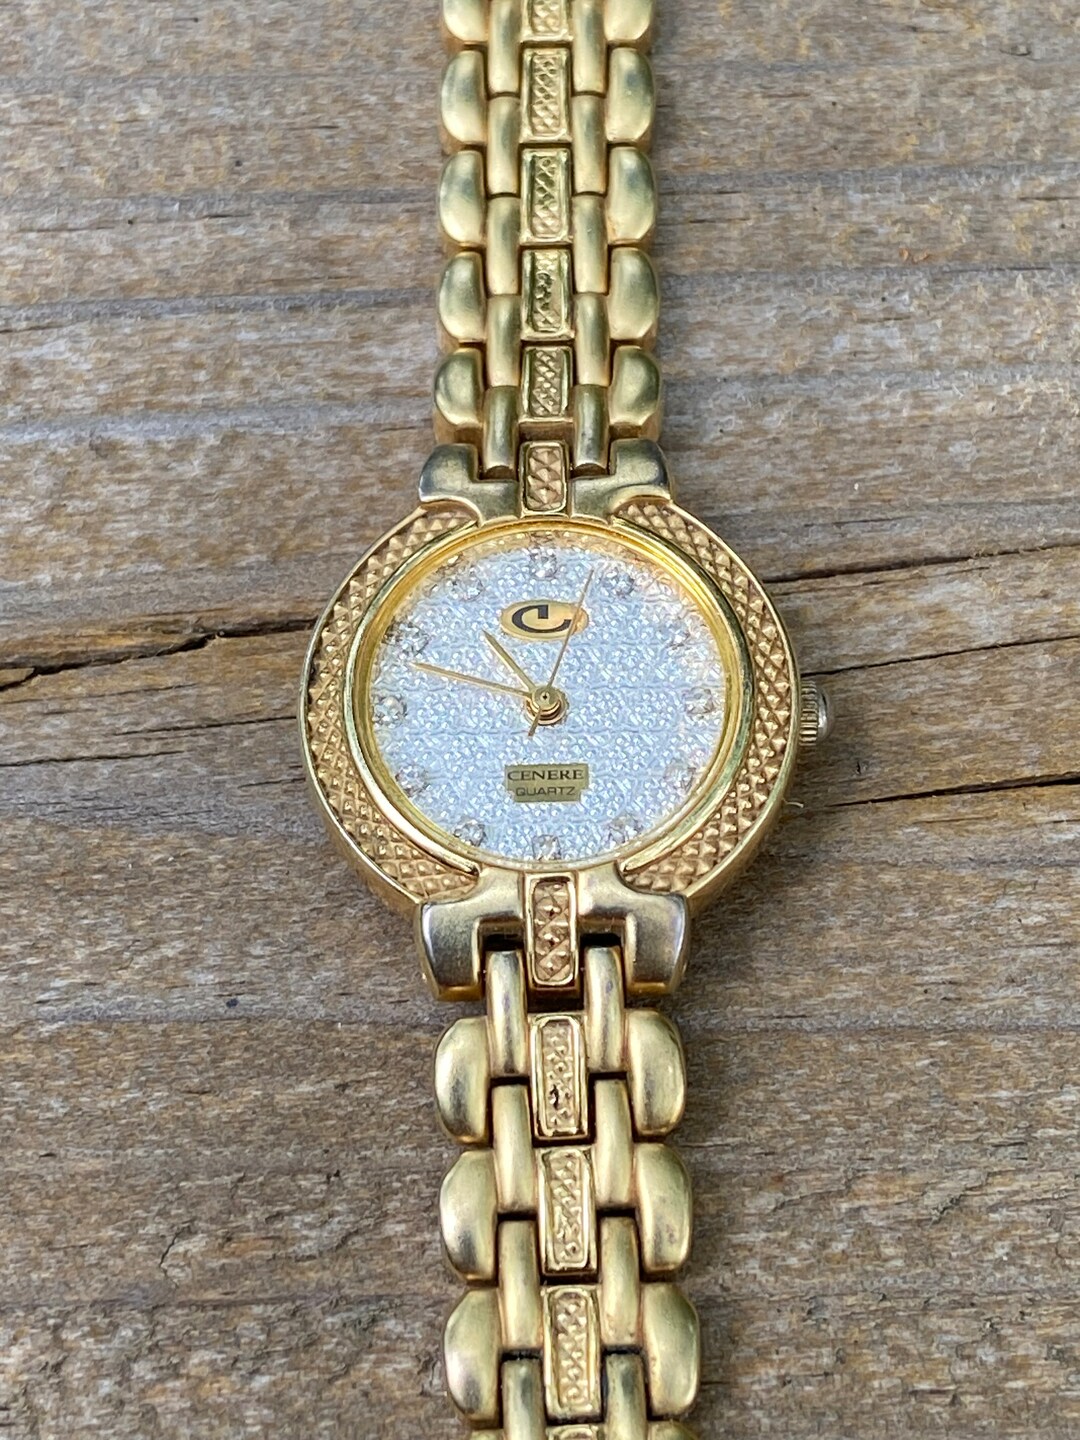 Vintage Cenere Quartz 23K Gold Plated Womens Watch - Etsy